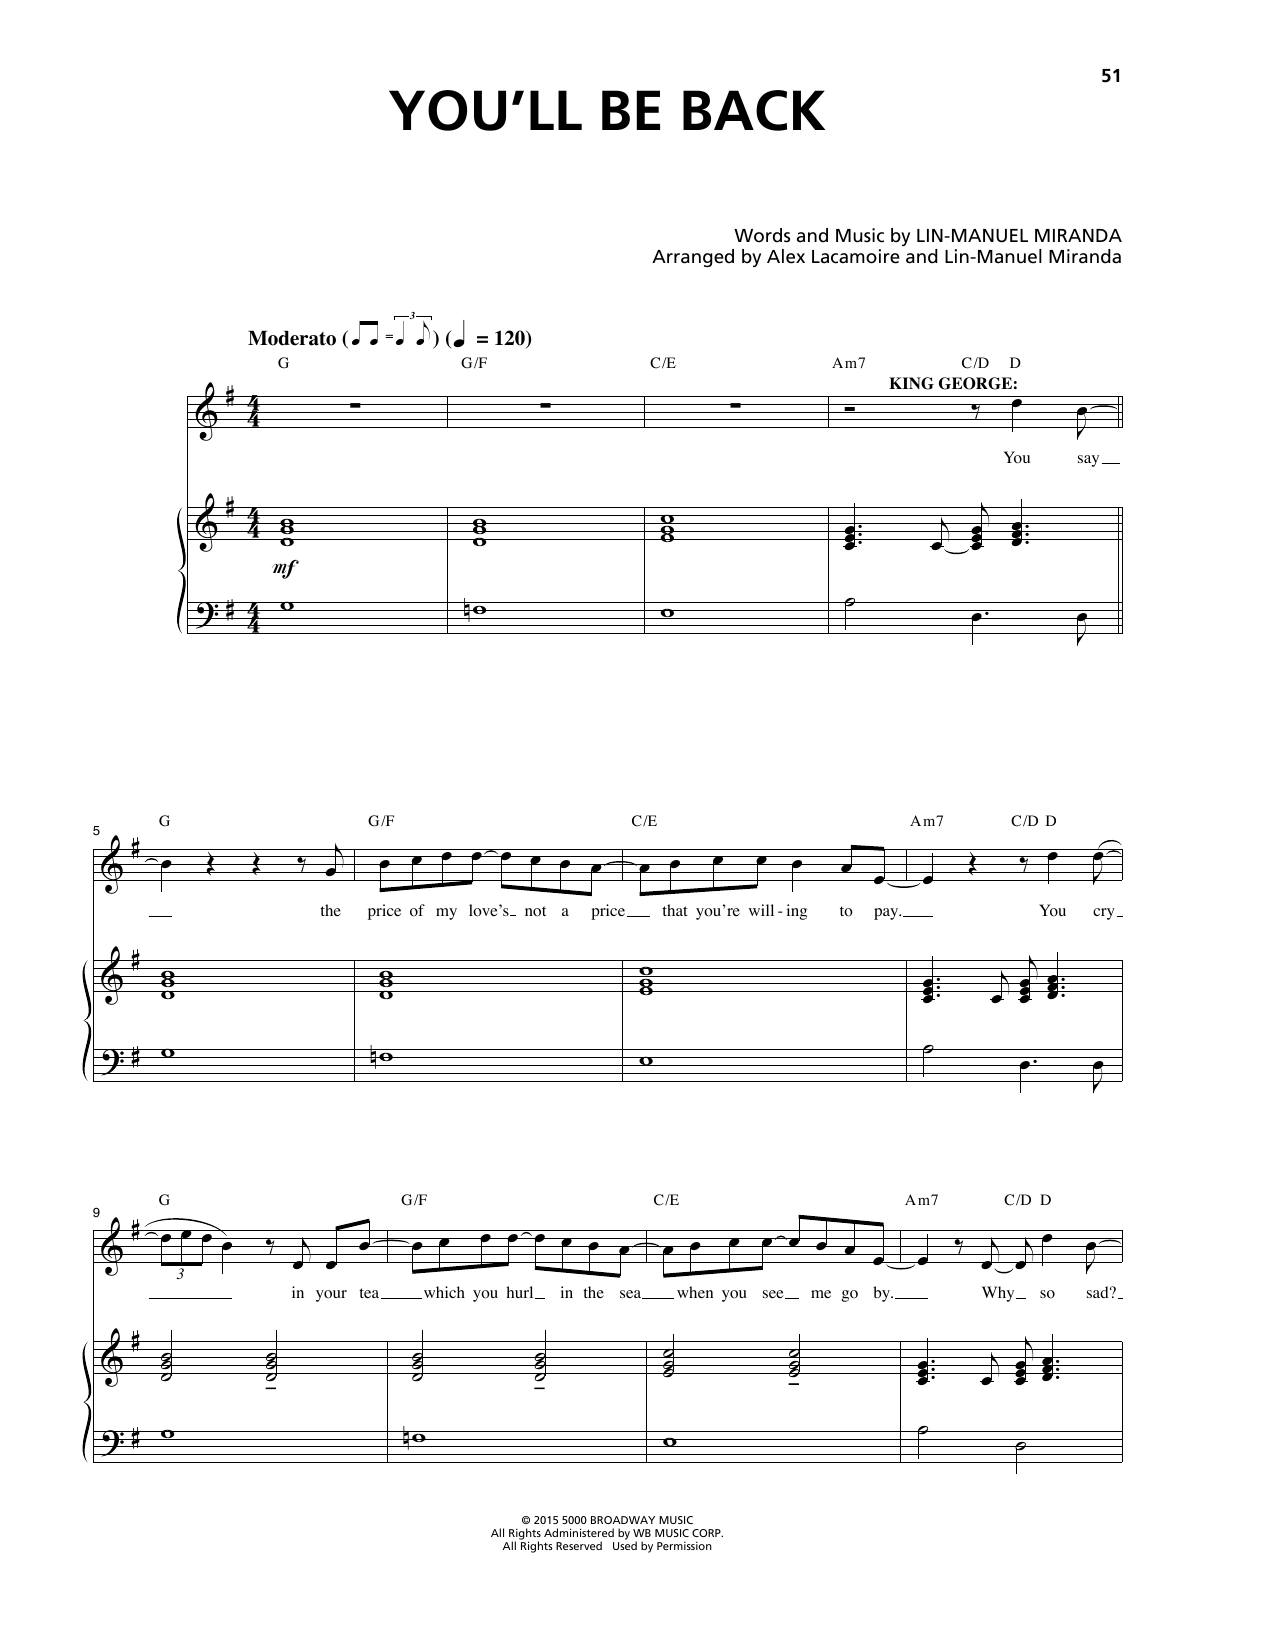 Lin-Manuel Miranda You'll Be Back (from Hamilton) Sheet Music Notes & Chords for Piano & Vocal - Download or Print PDF